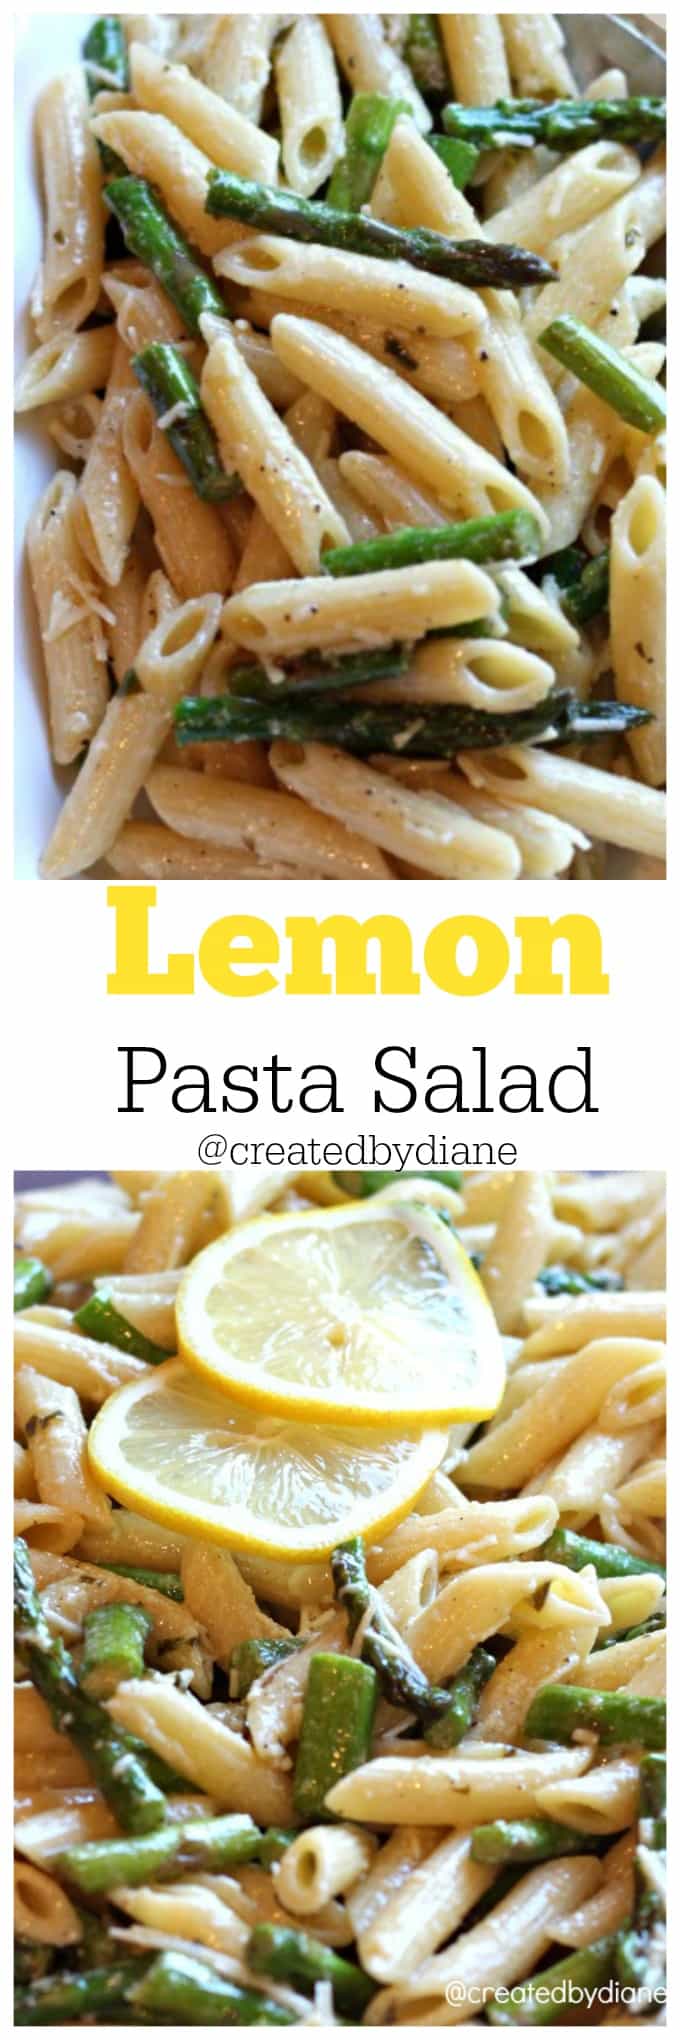 Lemon Pasta Salad recipe from @createdbydiane